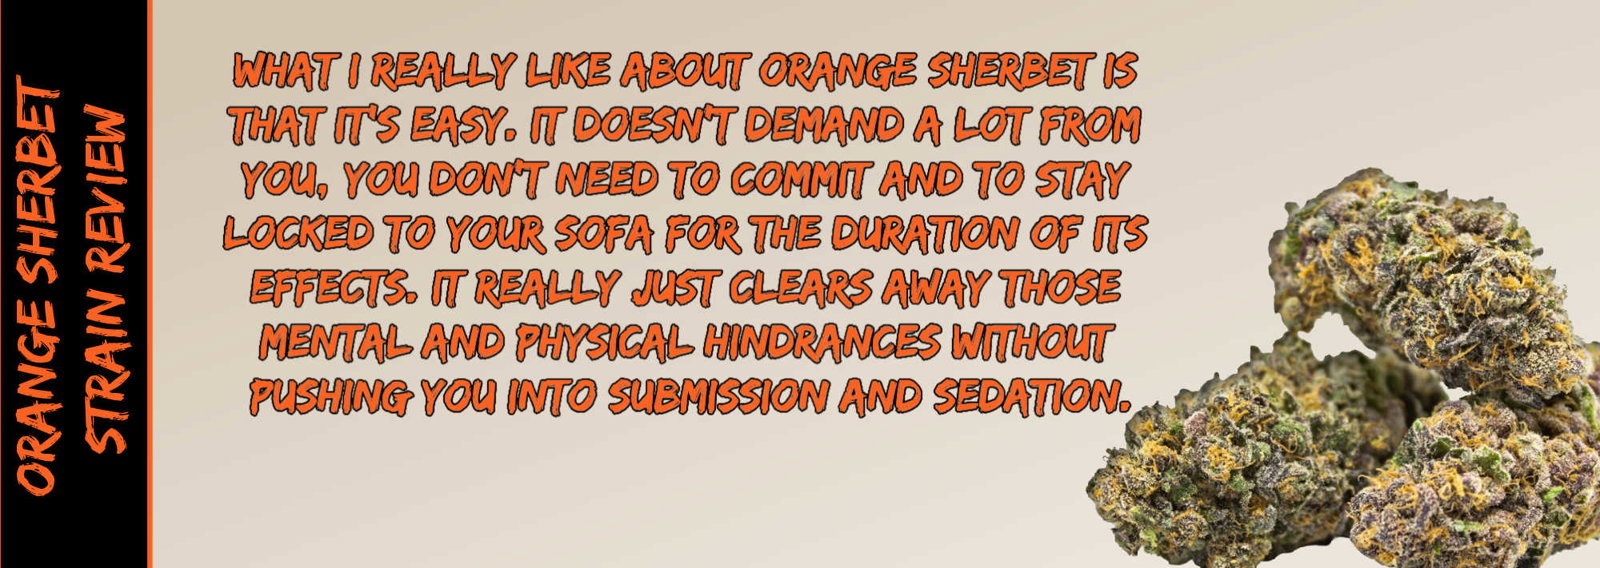 image of orange sherbet strain reviews